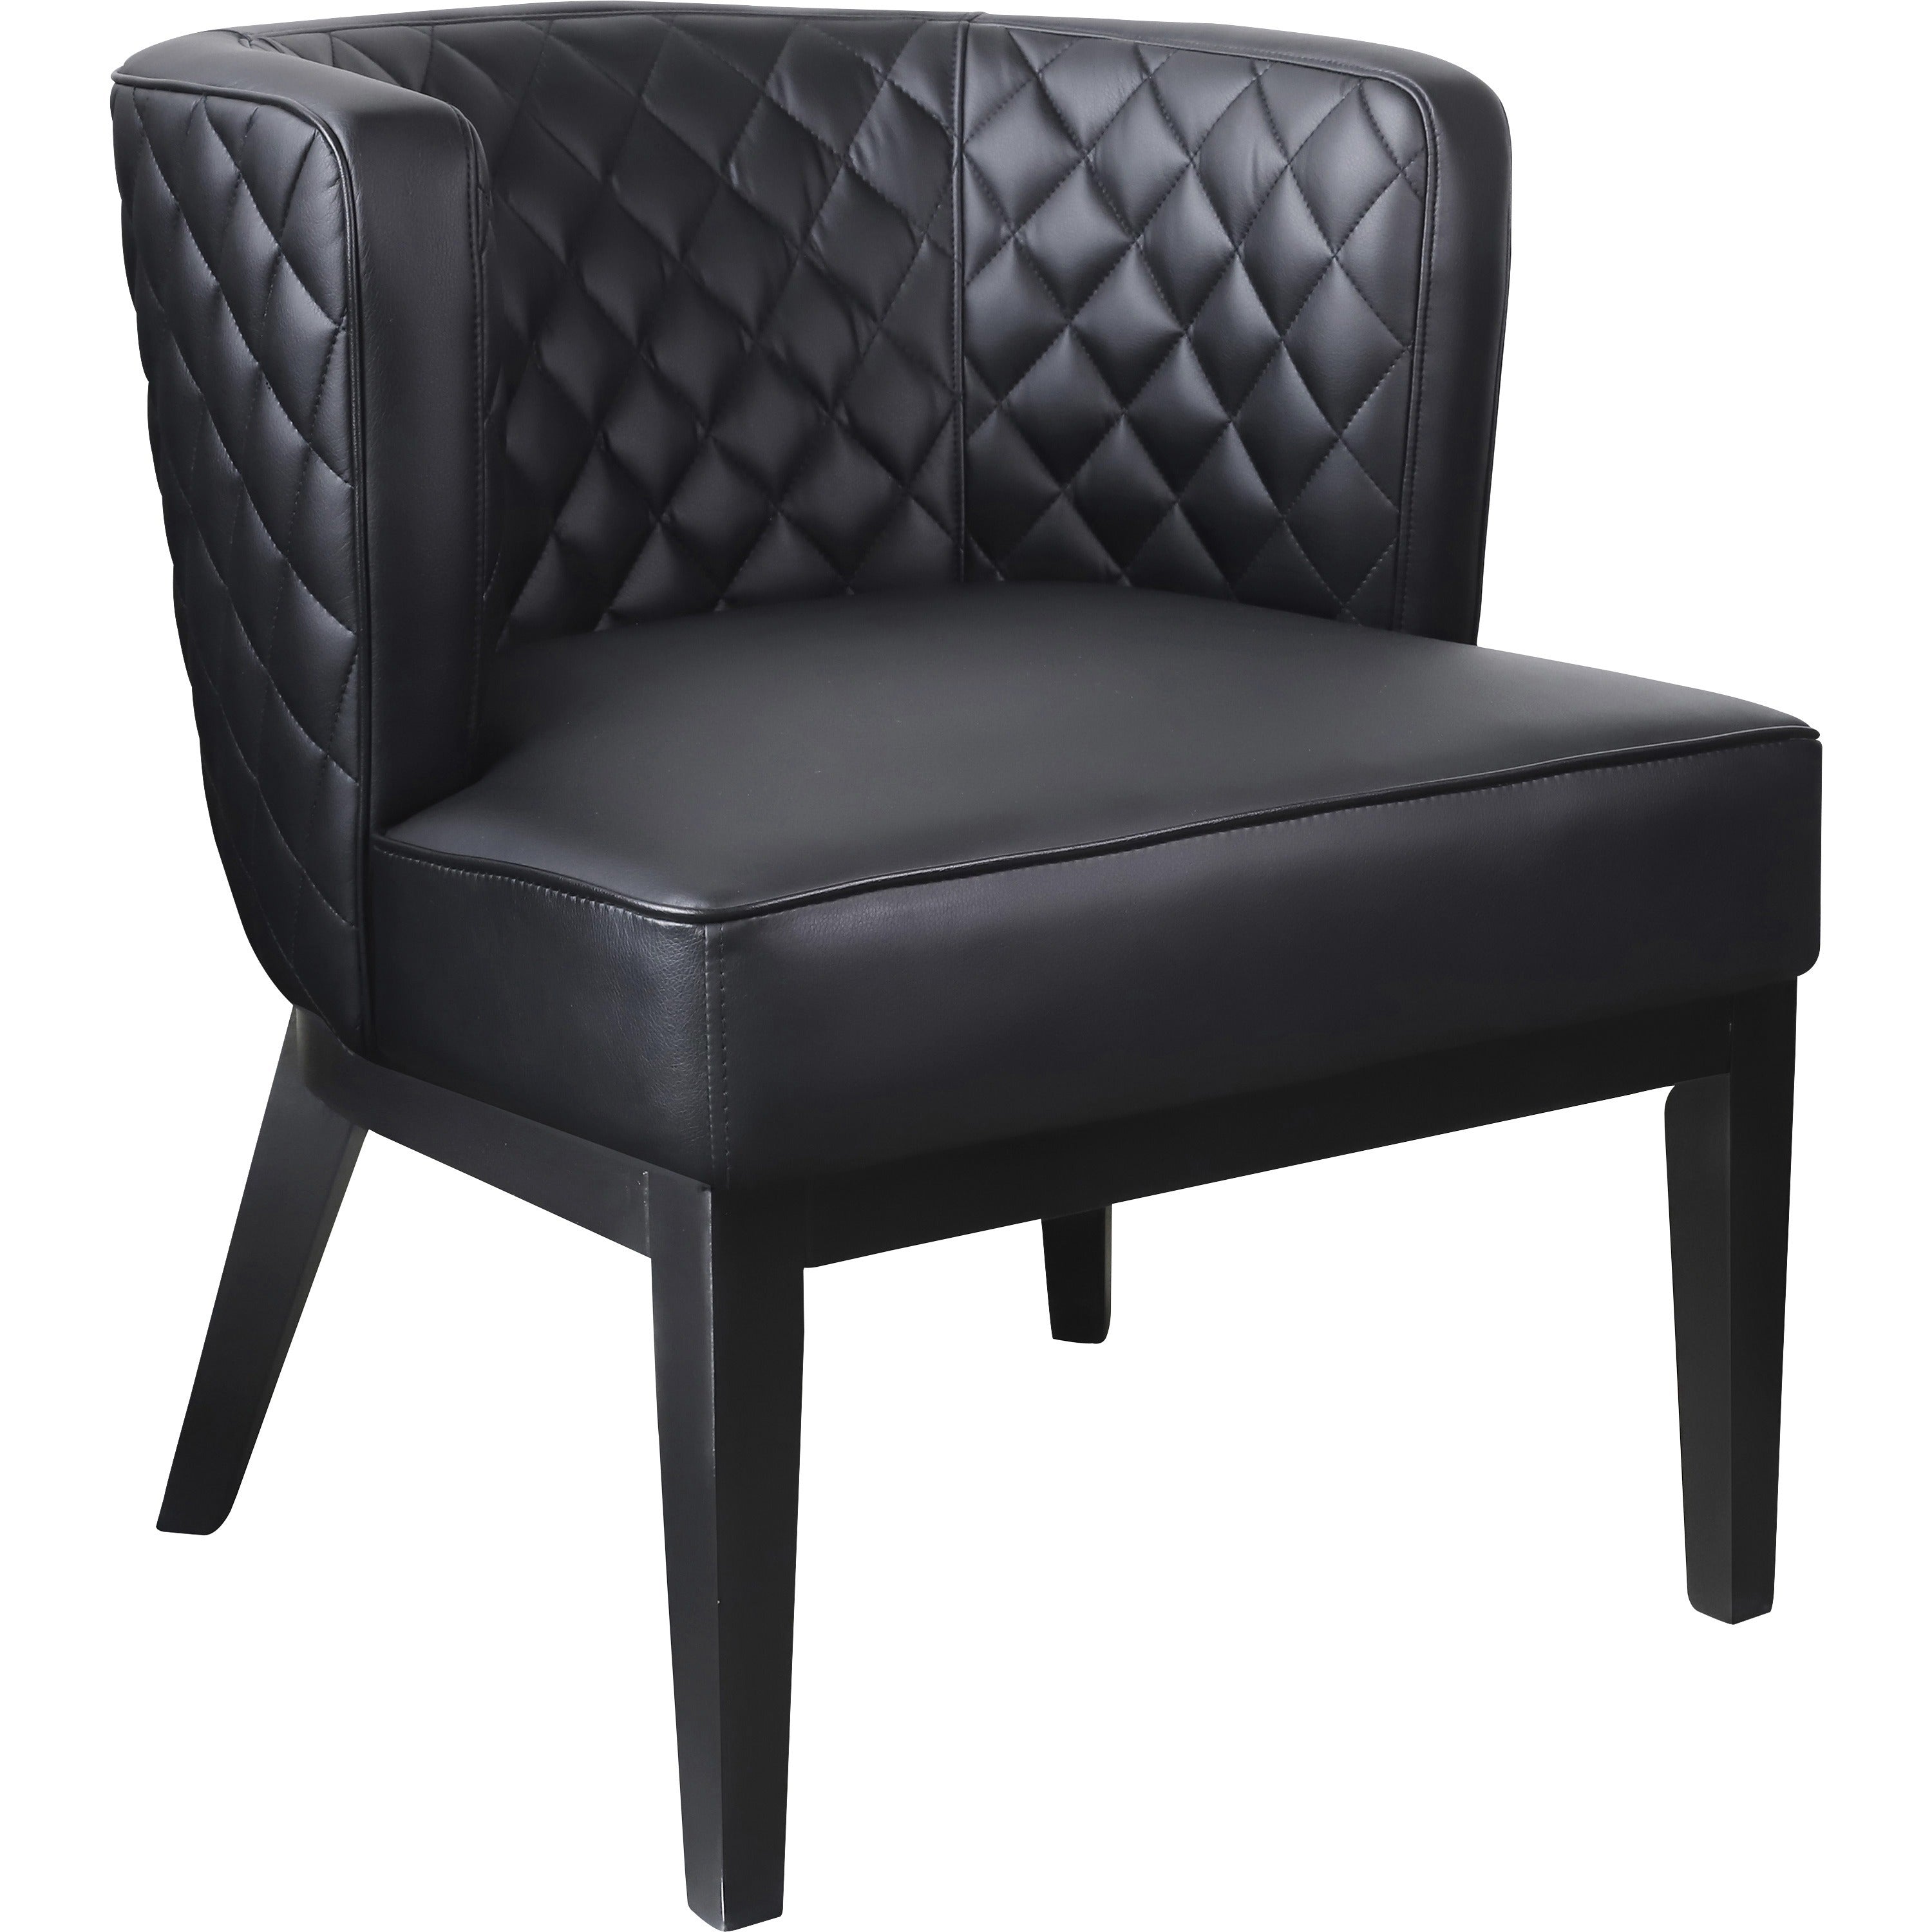 Boss Ava Accent Chair - Black Plush Seat - Black Back - Four-legged Base - 1 Each - 1